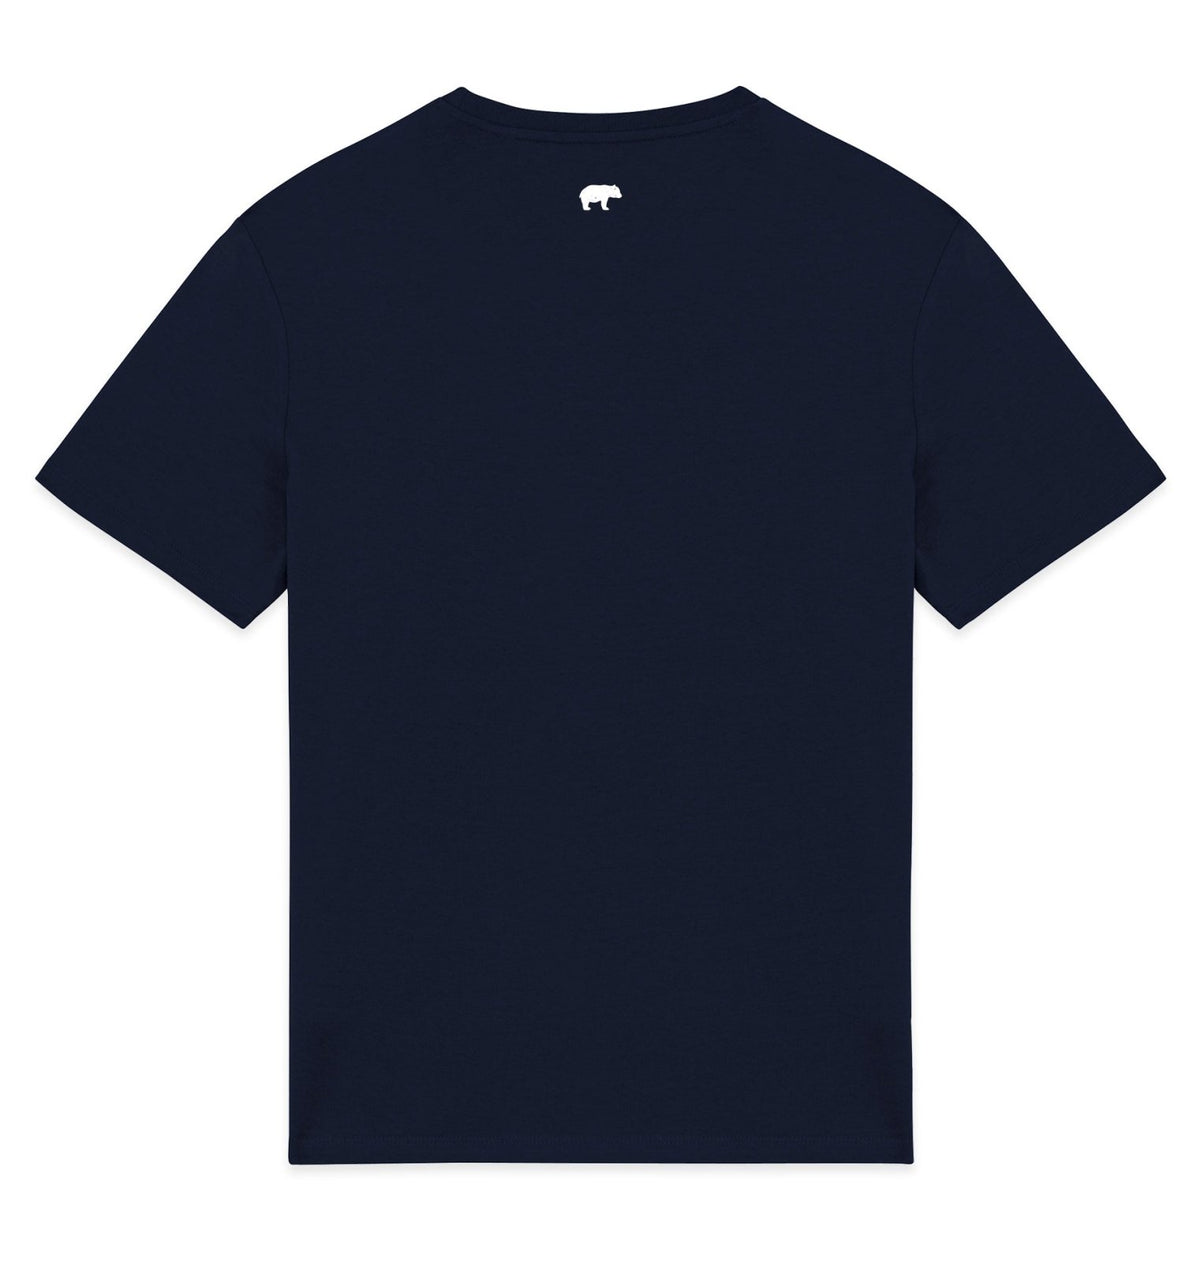 Tiger Front Print Mens T-shirt - Blue Panda